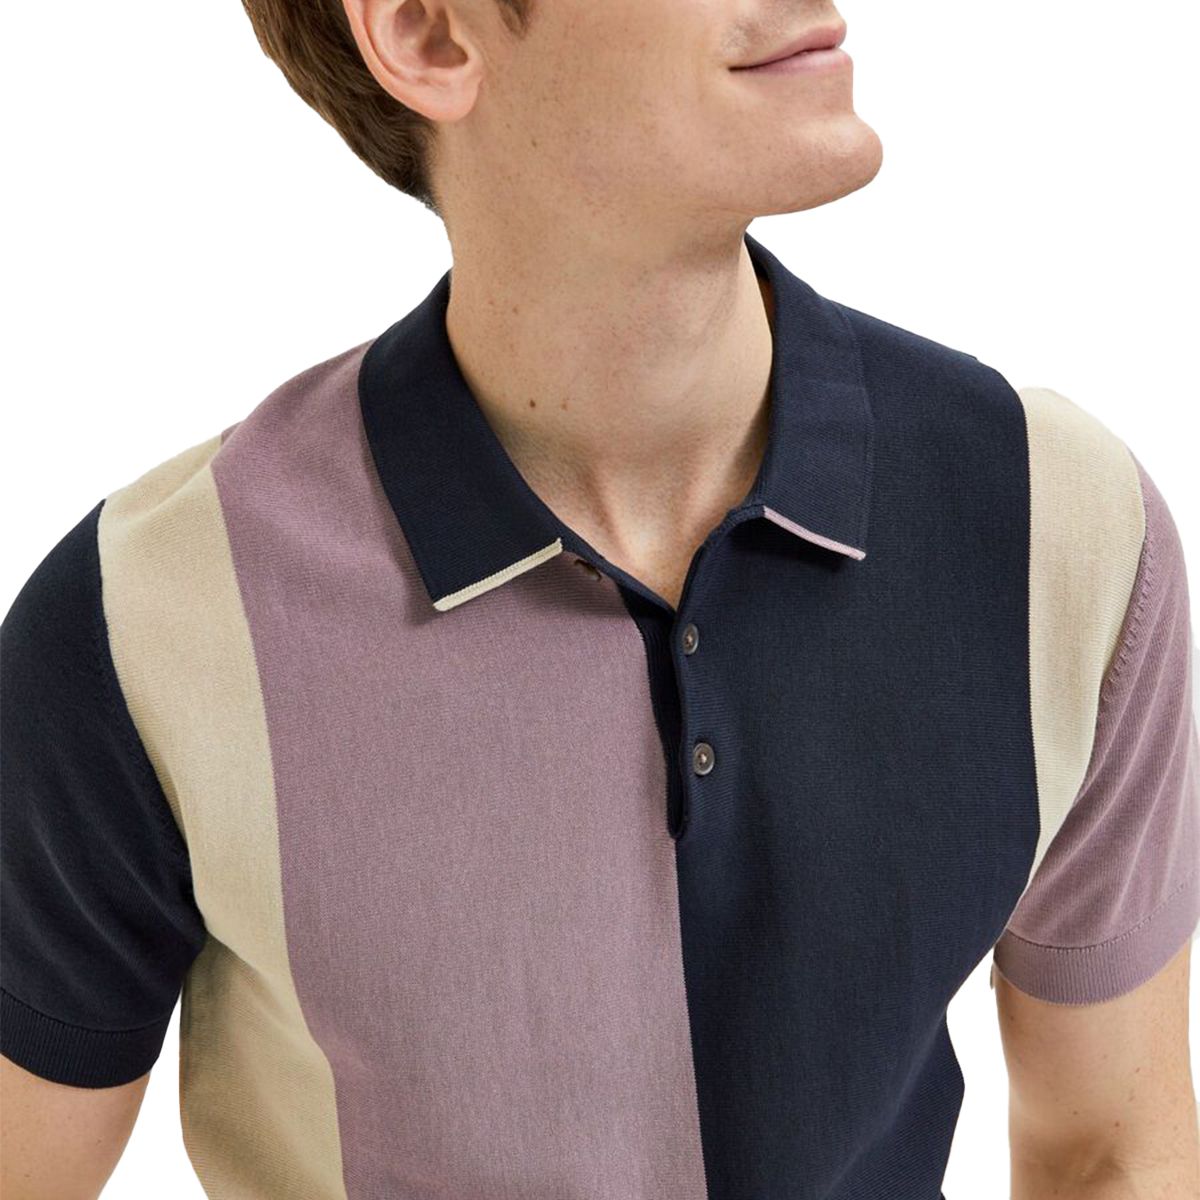 Elderberry Block Striped Polo Shirt